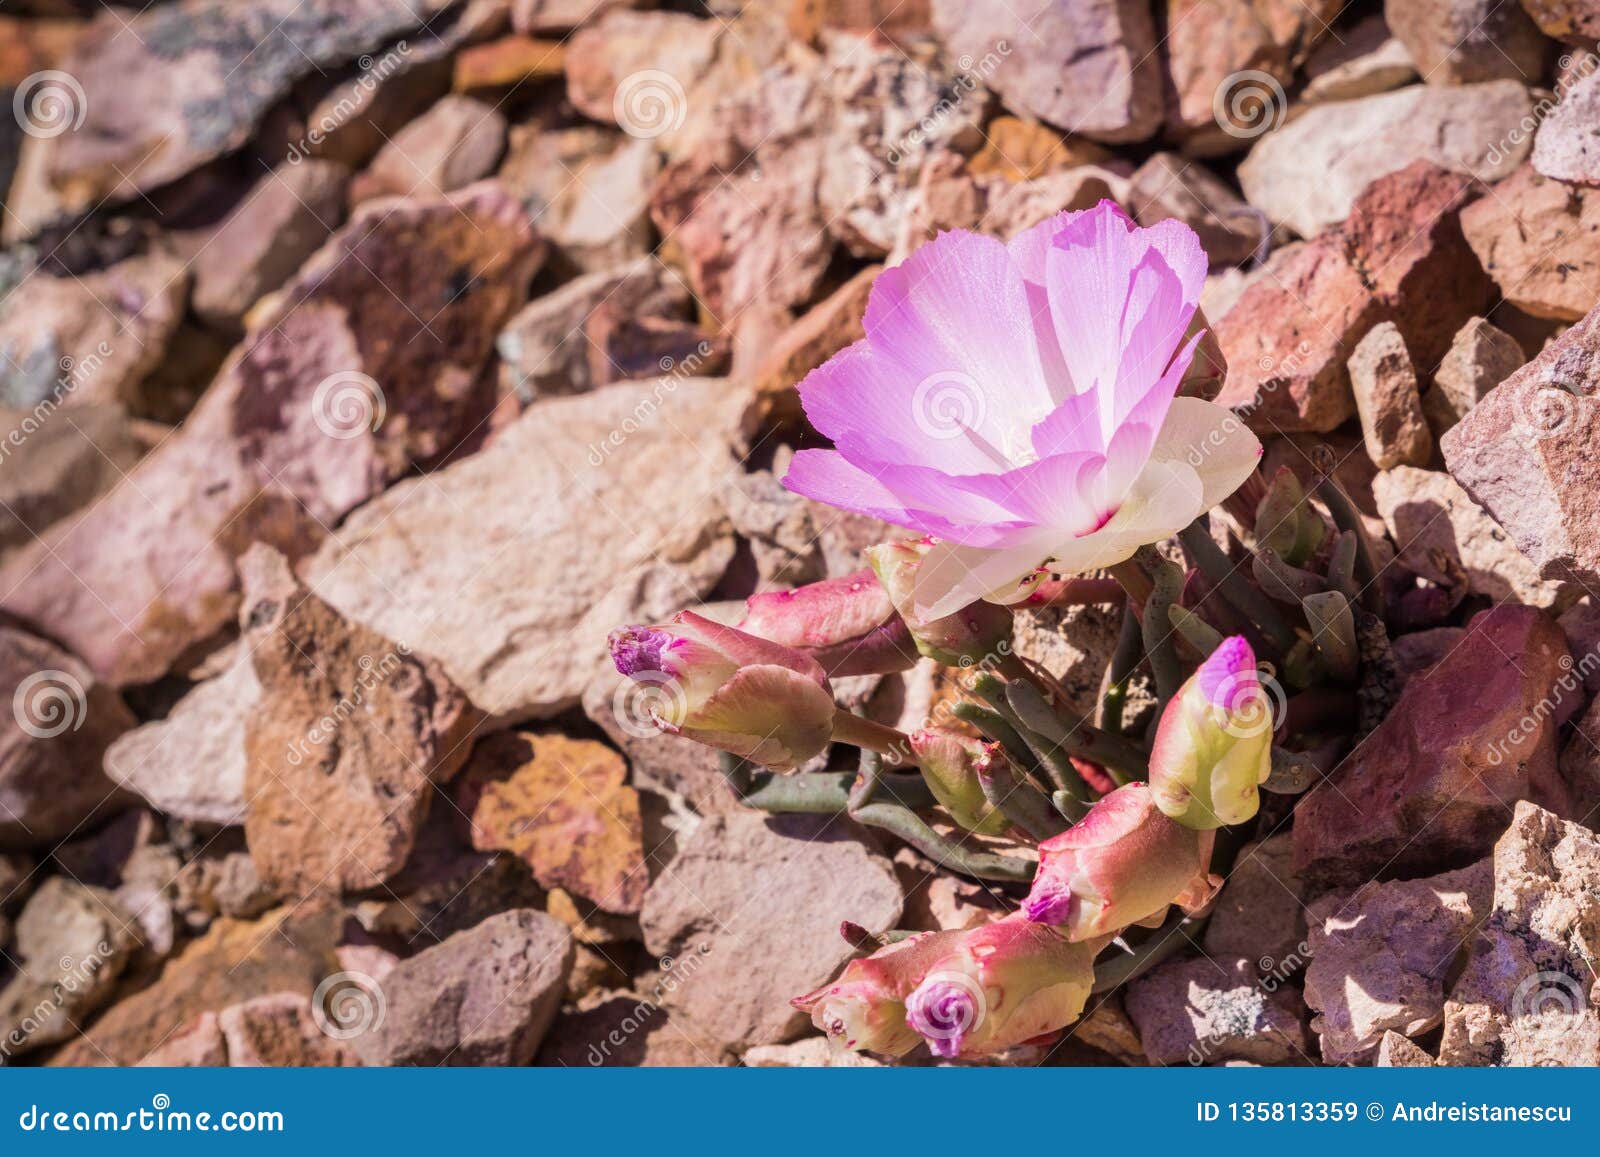 bitterroot lewisia rediviva, the state flower of montana; blooming in spring in pinnacles national park, california